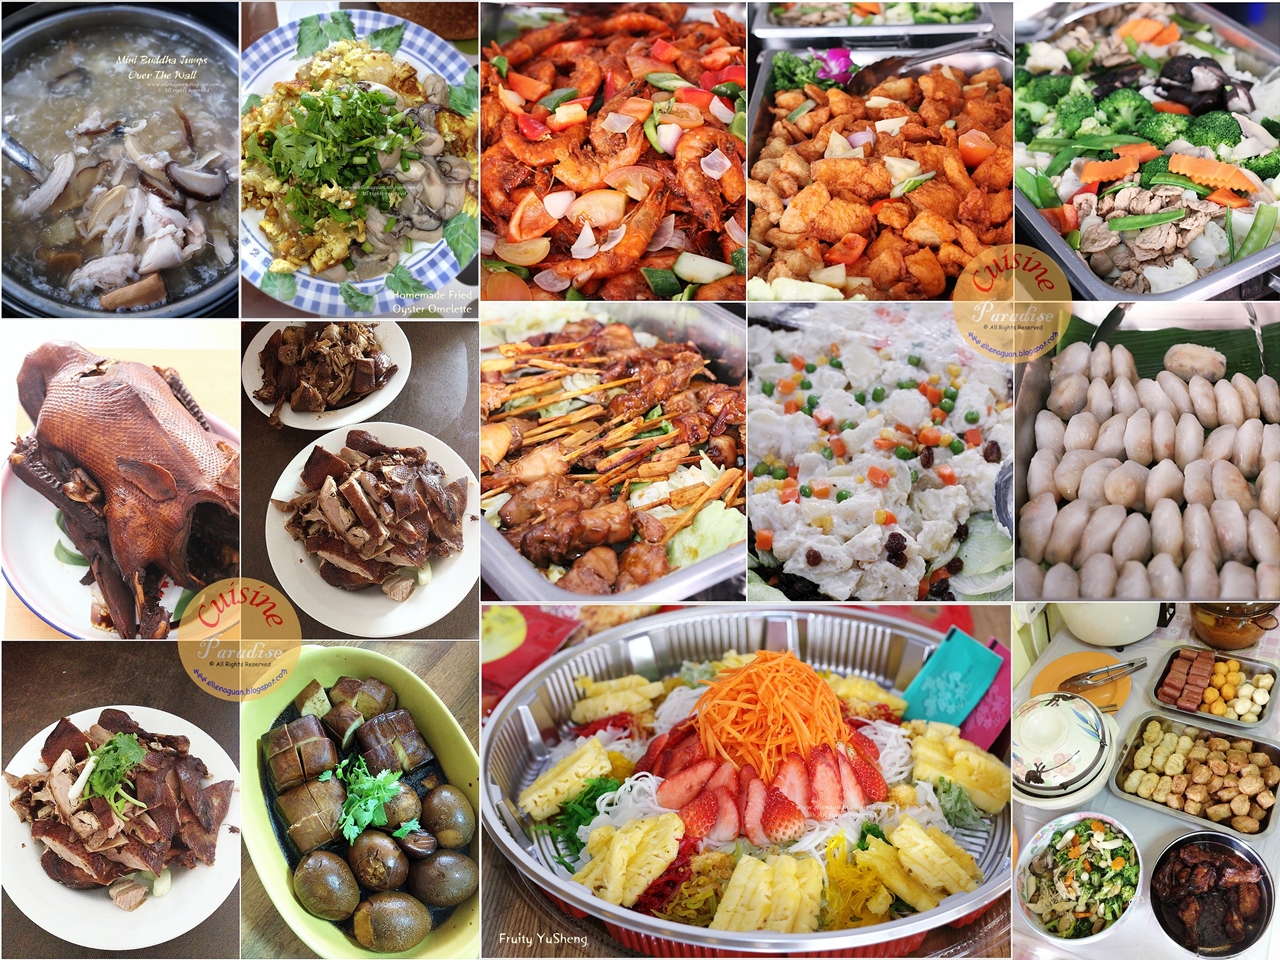 Cuisine Paradise | Singapore Food Blog | Recipes, Reviews And Travel ...